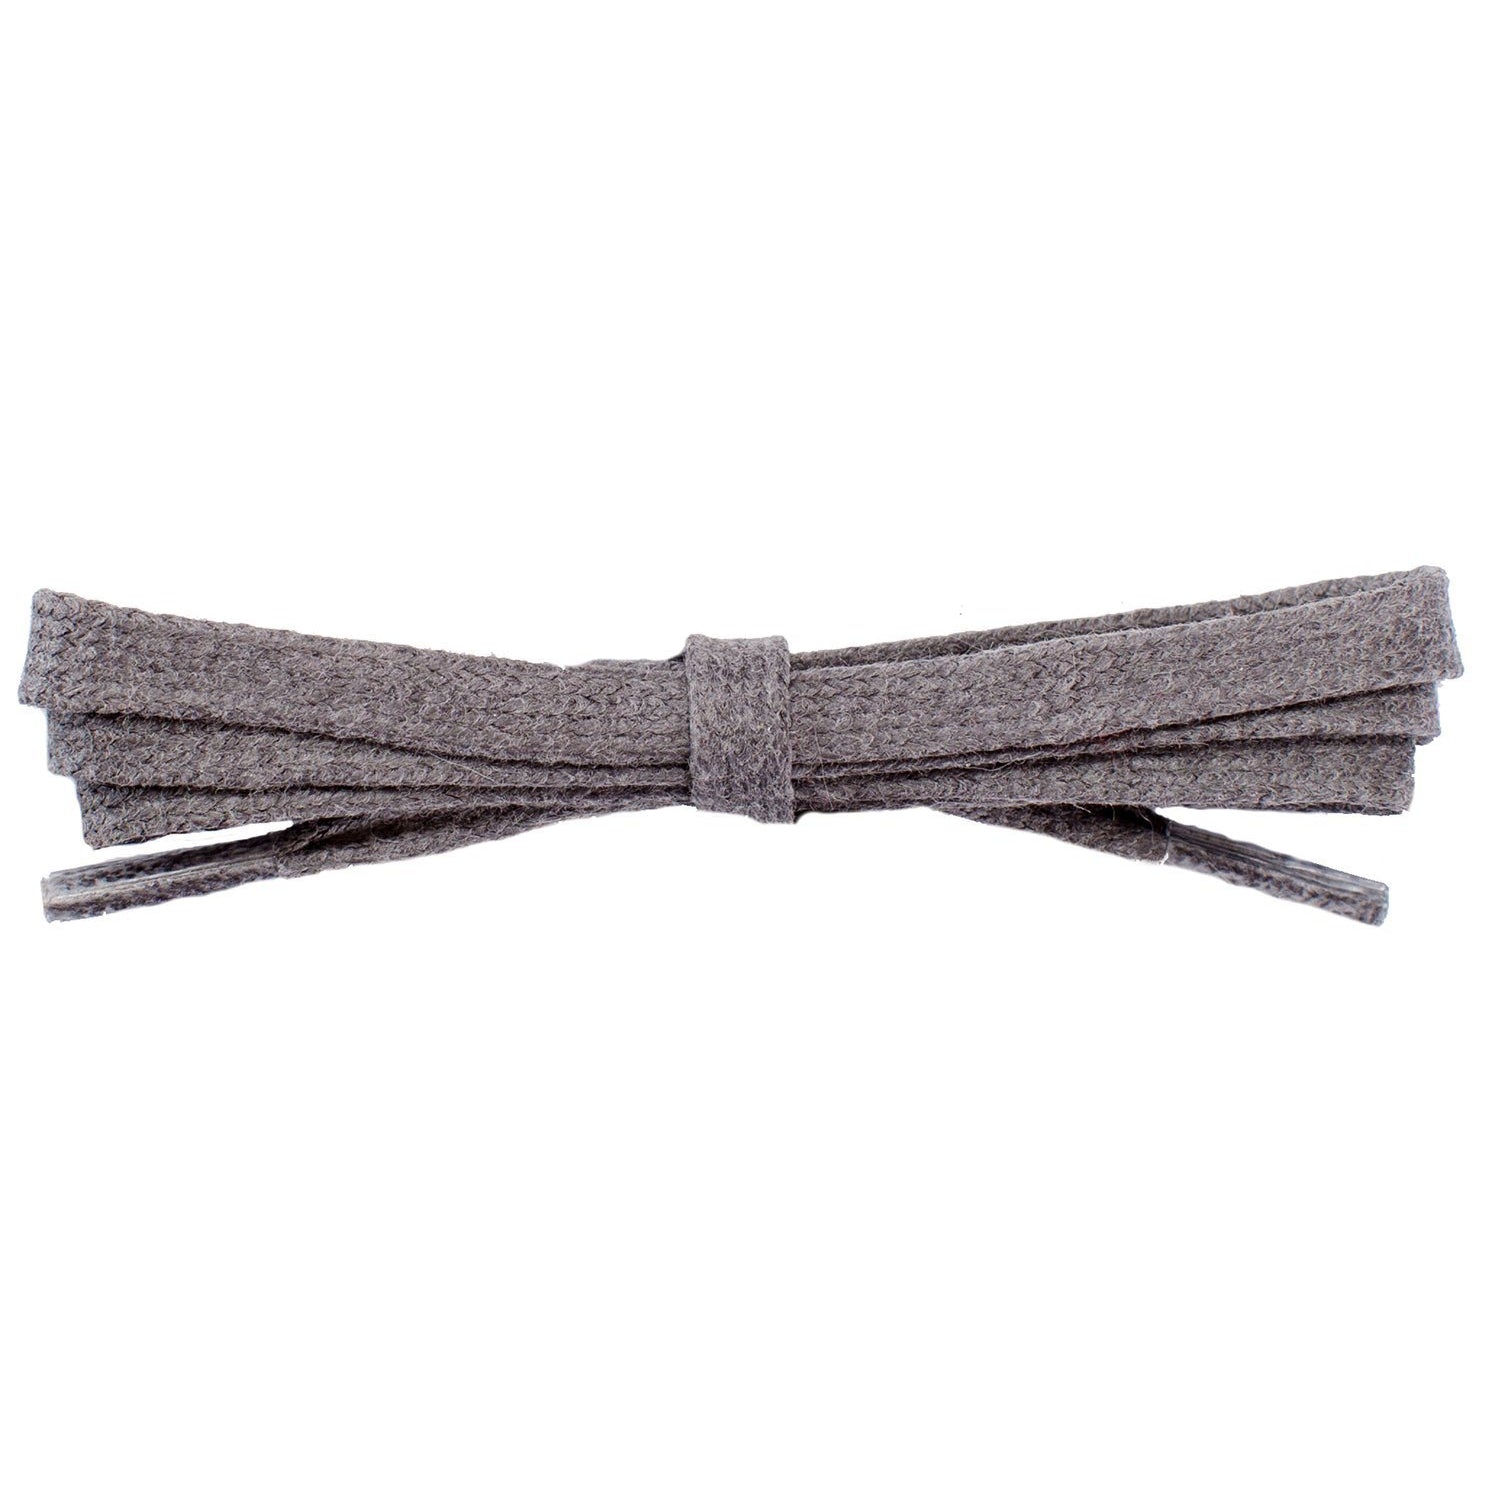 Wholesale Waxed Cotton Flat DRESS Laces 1/4'' - Dark Gray (12 Pair Pack) Shoelaces